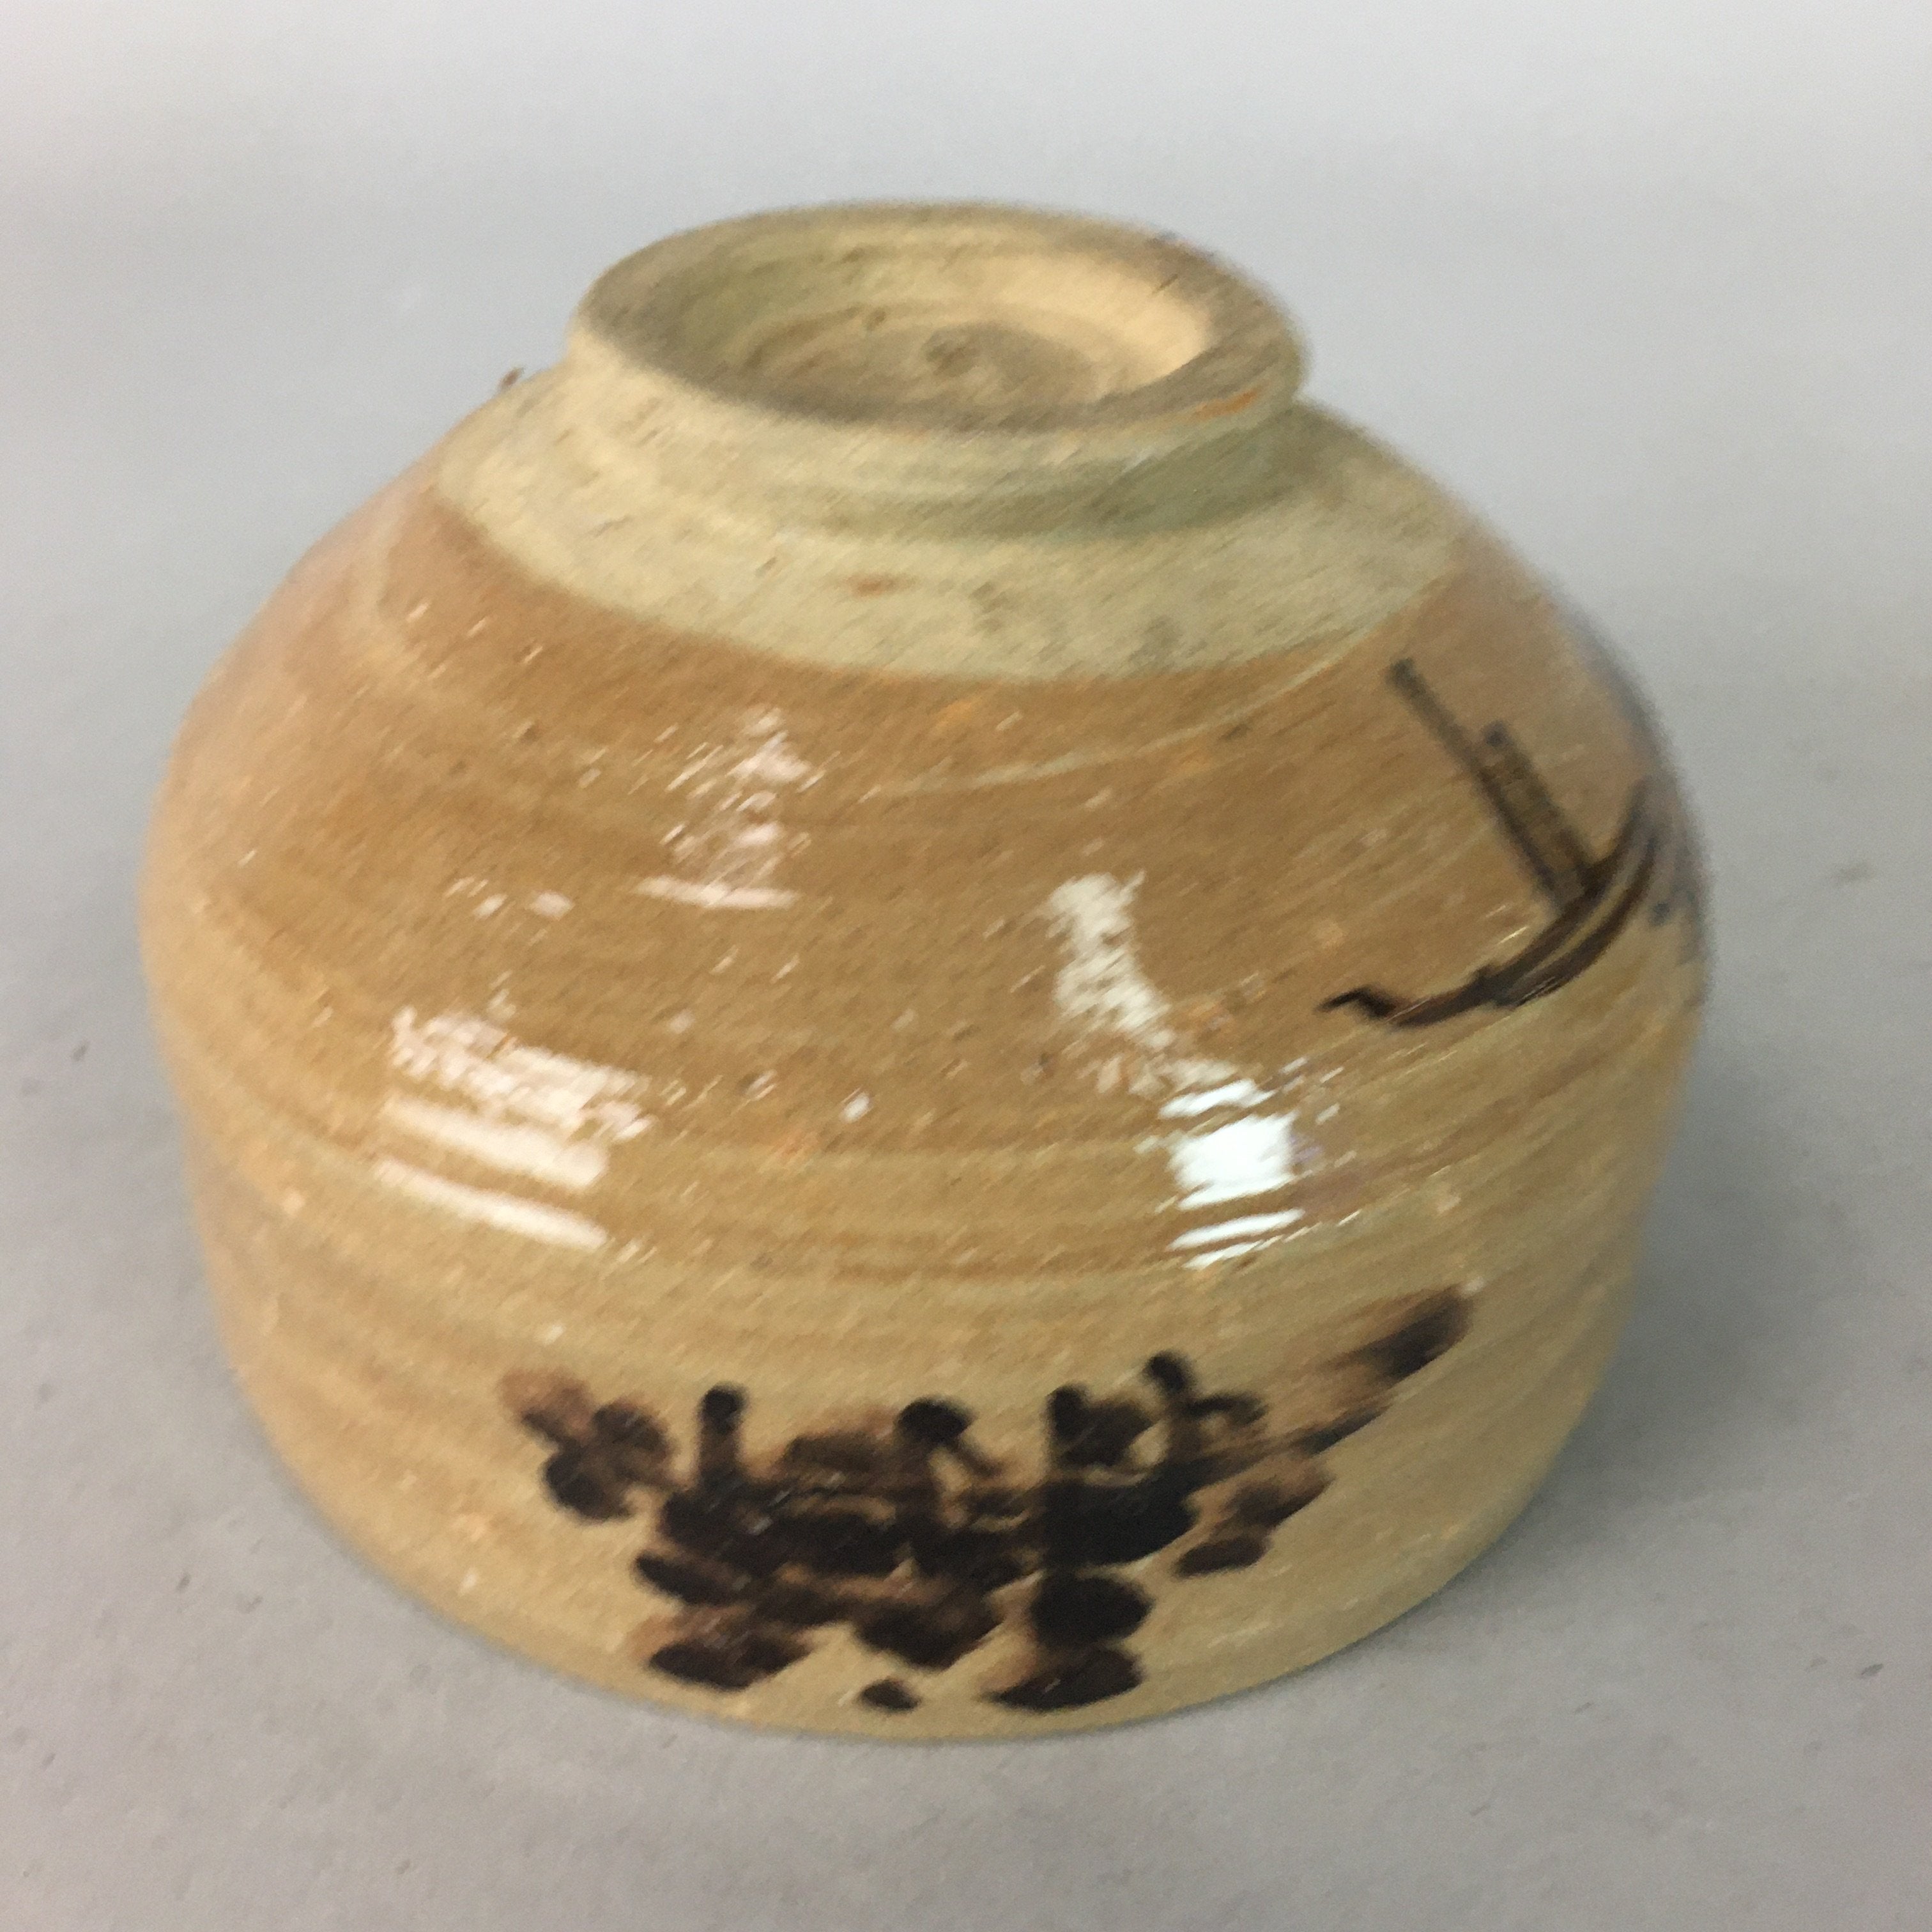 Japanese Ceramic Tea Ceremony Bowl Chawan Vtg Brown Pottery GTB637